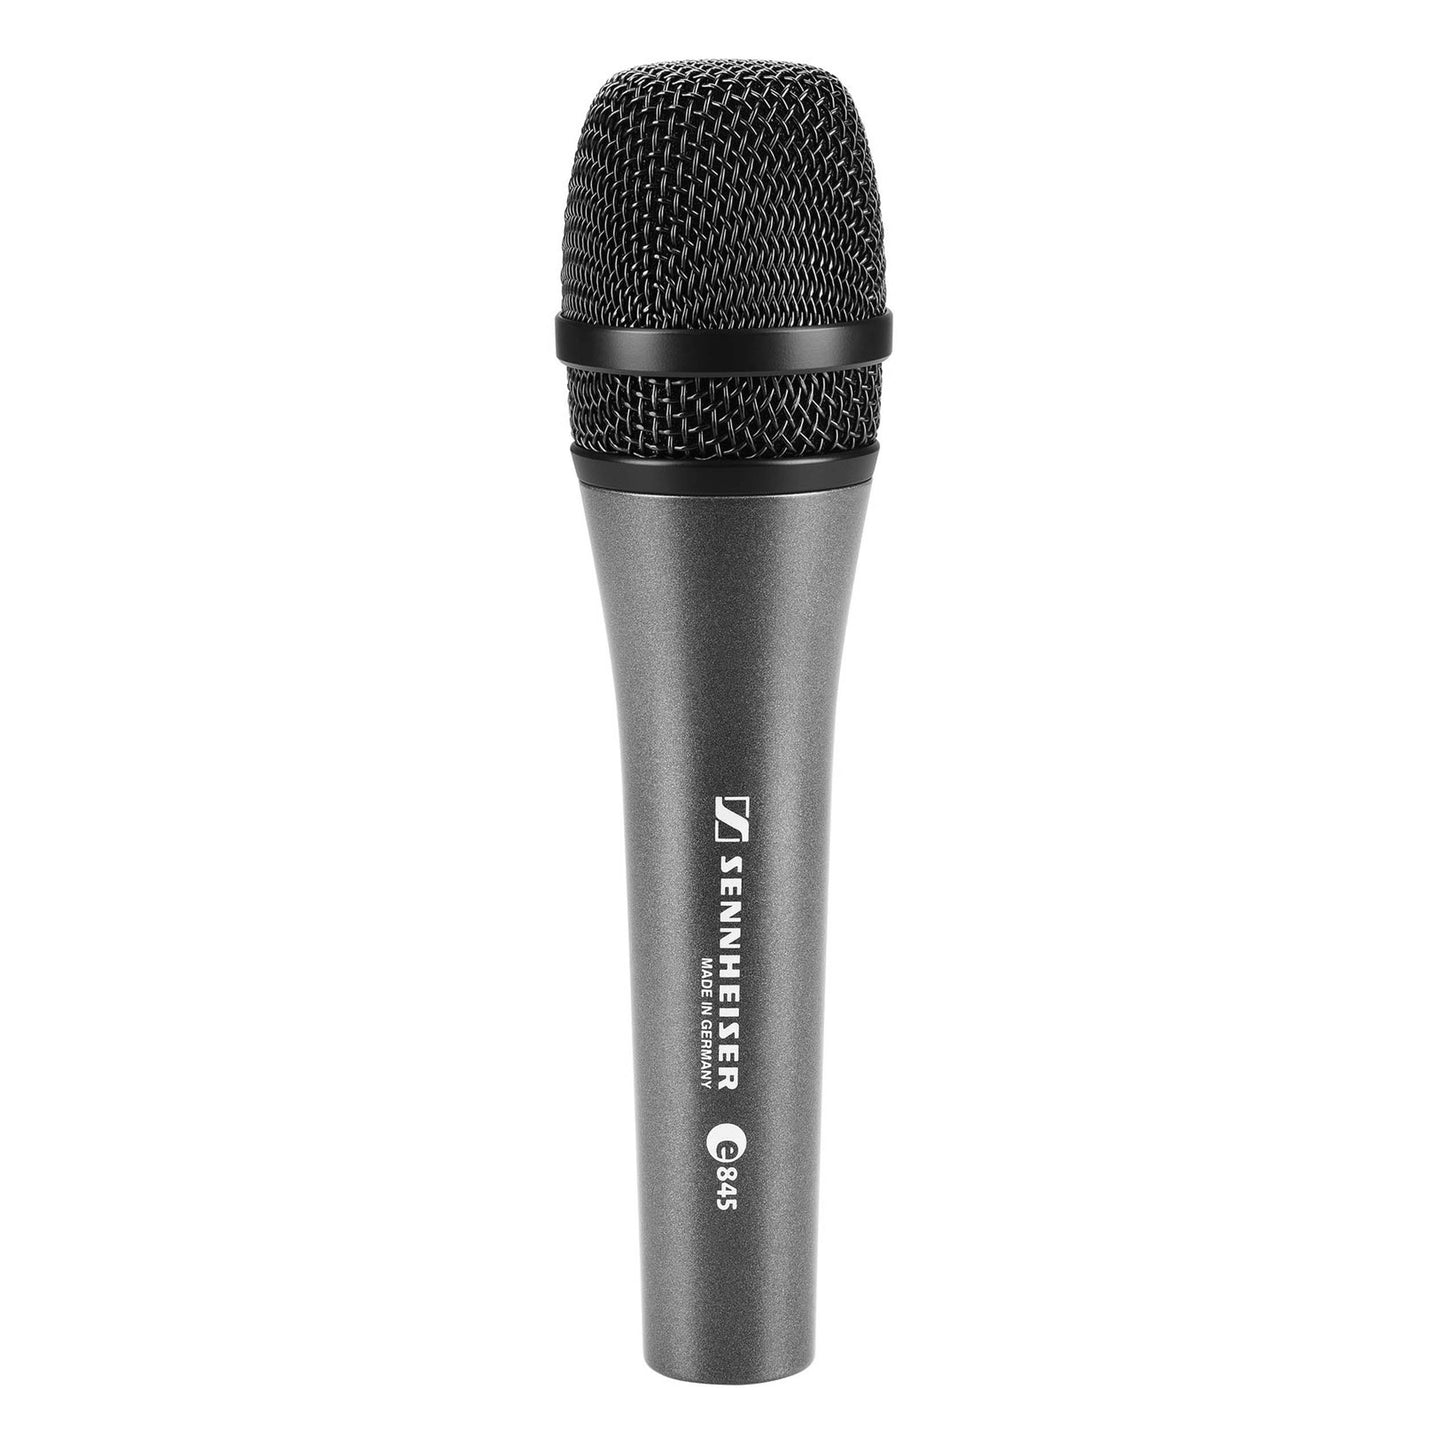 Sennheiser e845 High Performance Handheld Supercardioid Vocal Mic